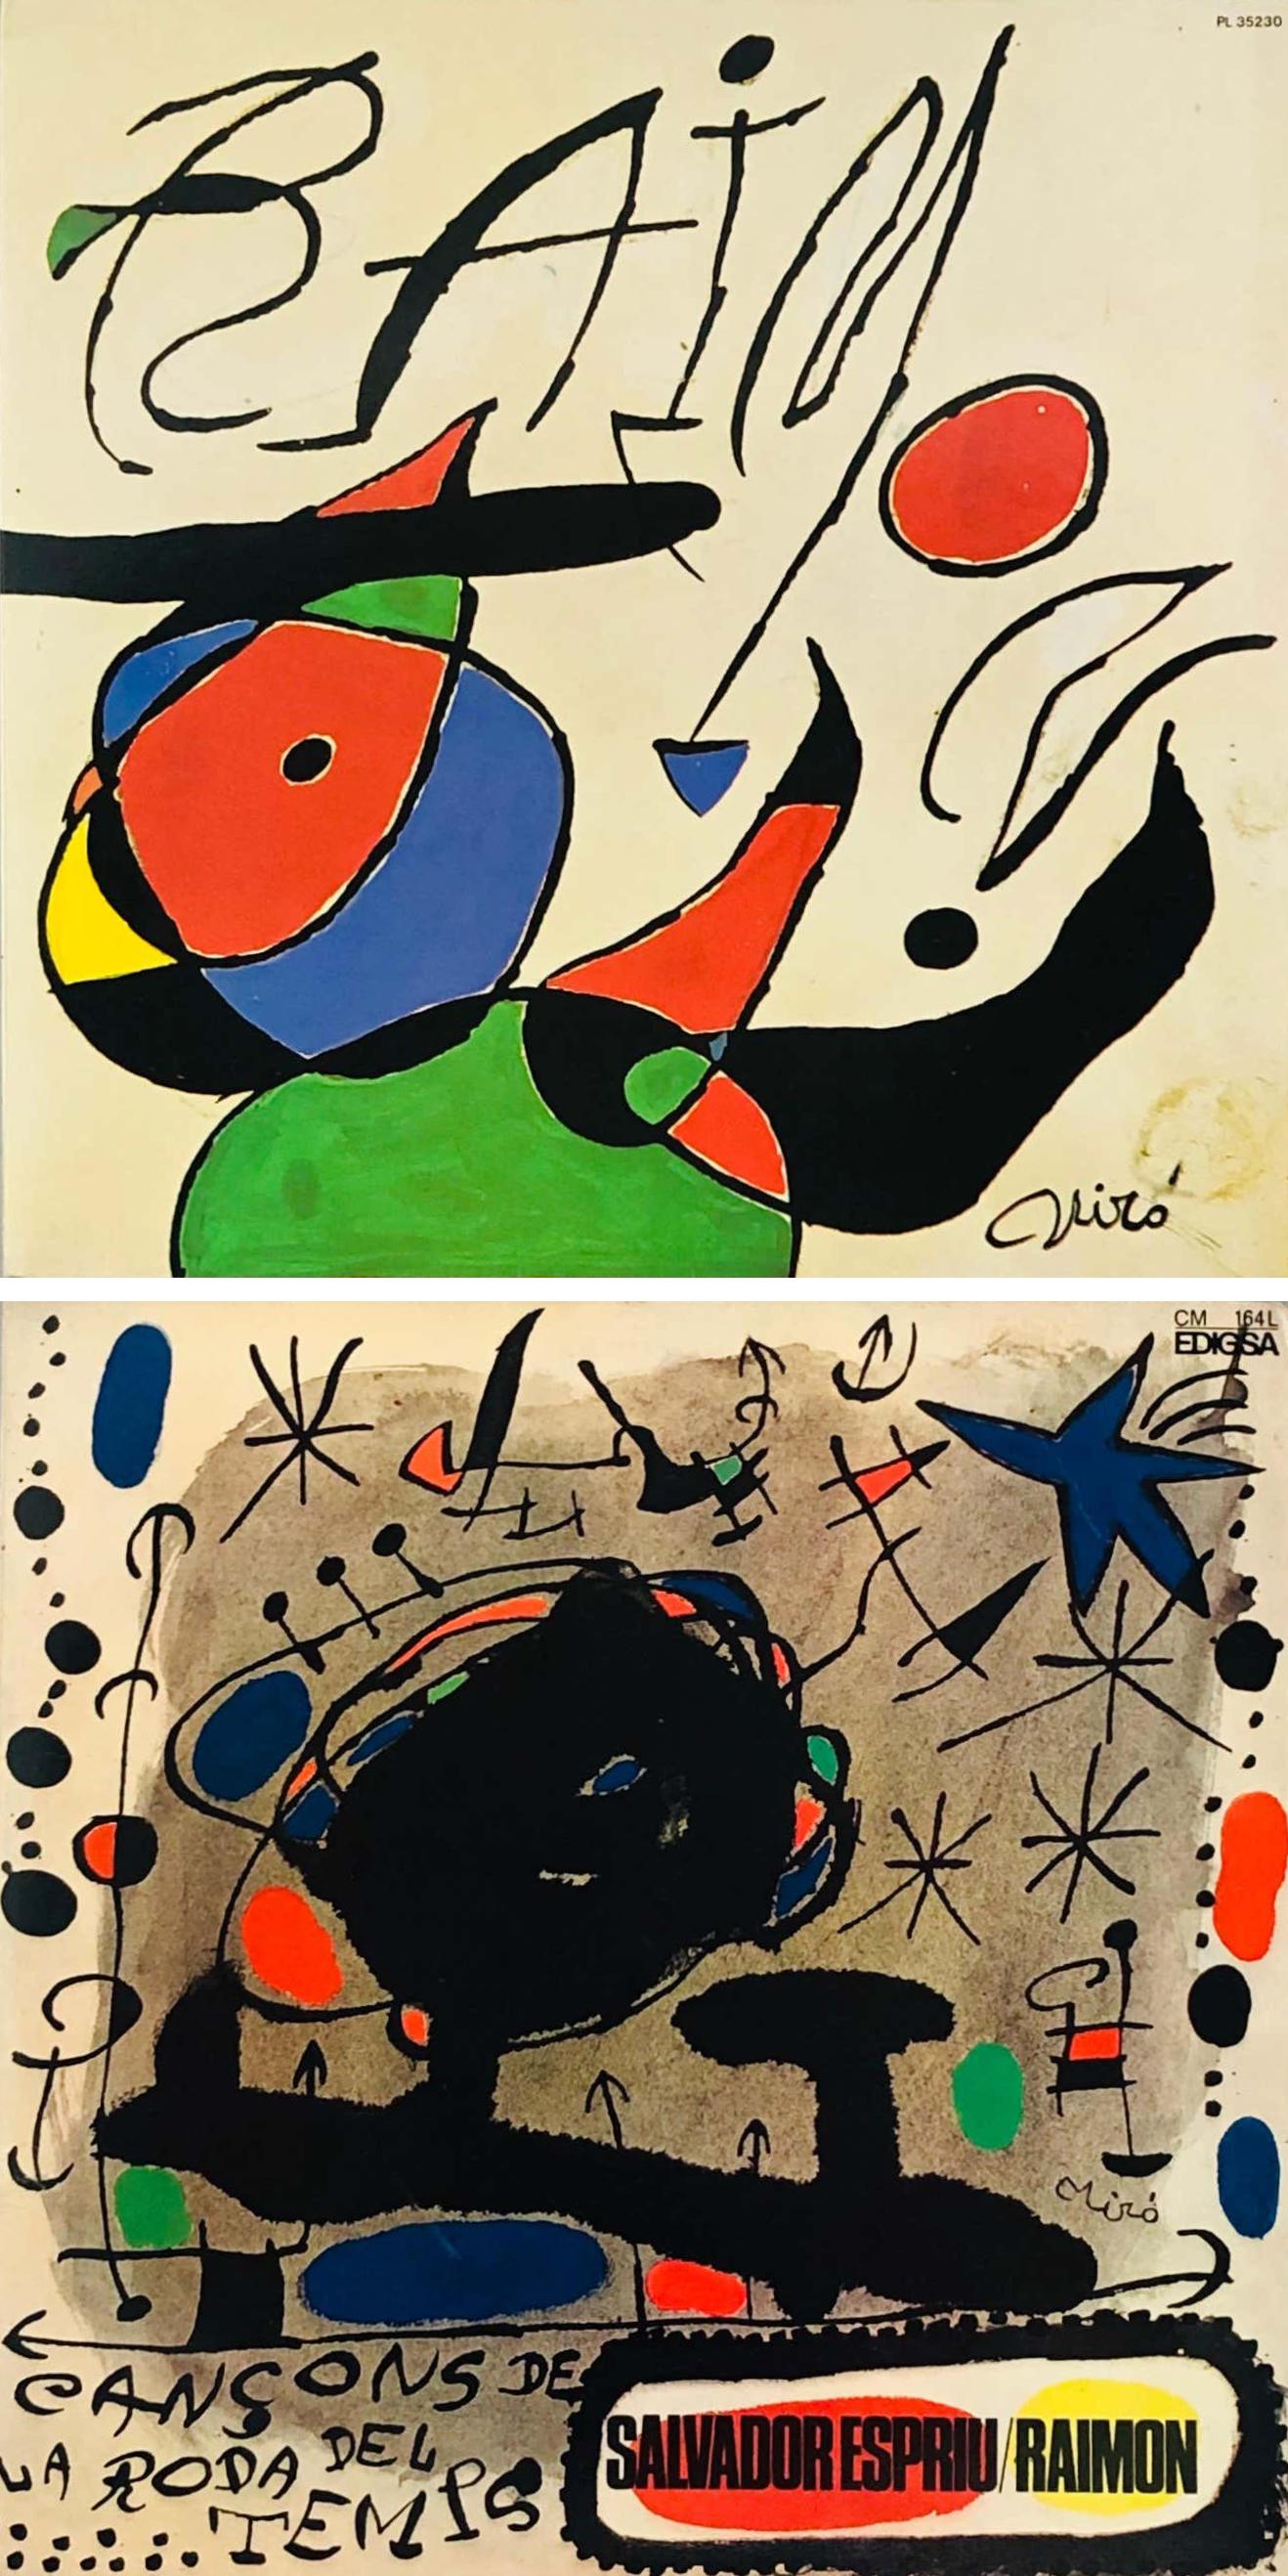 Joan Miró Record Art (set of 2 works)